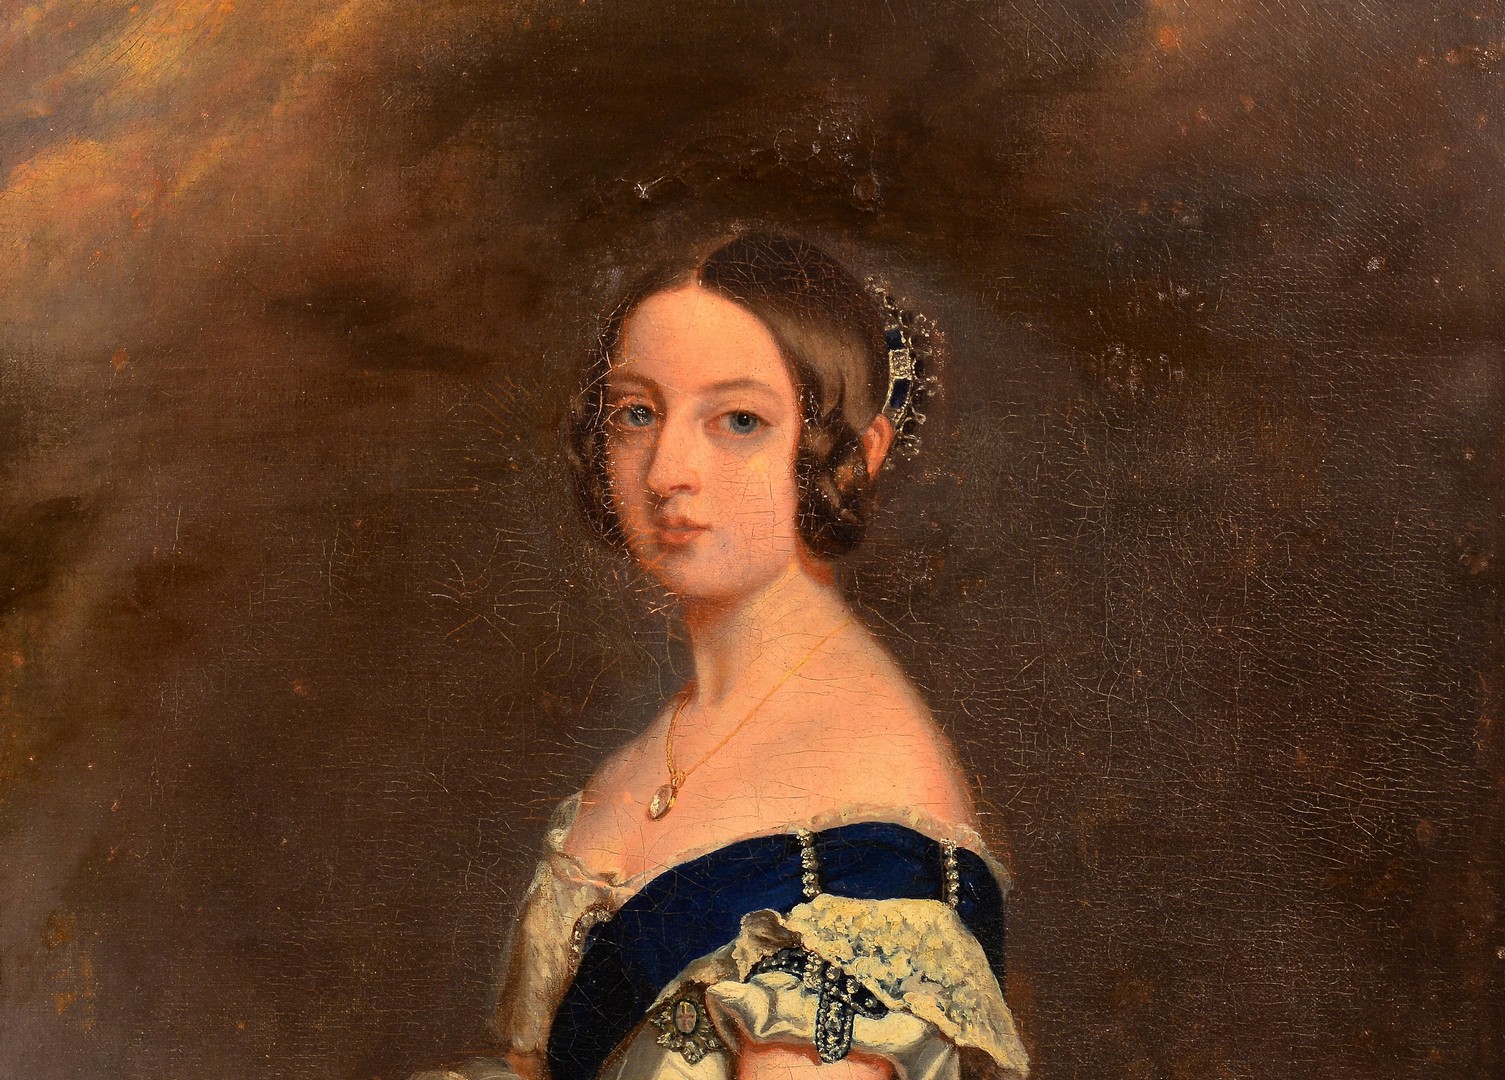 Lot 93: After F. Winterhalter, Queen Victoria portrait